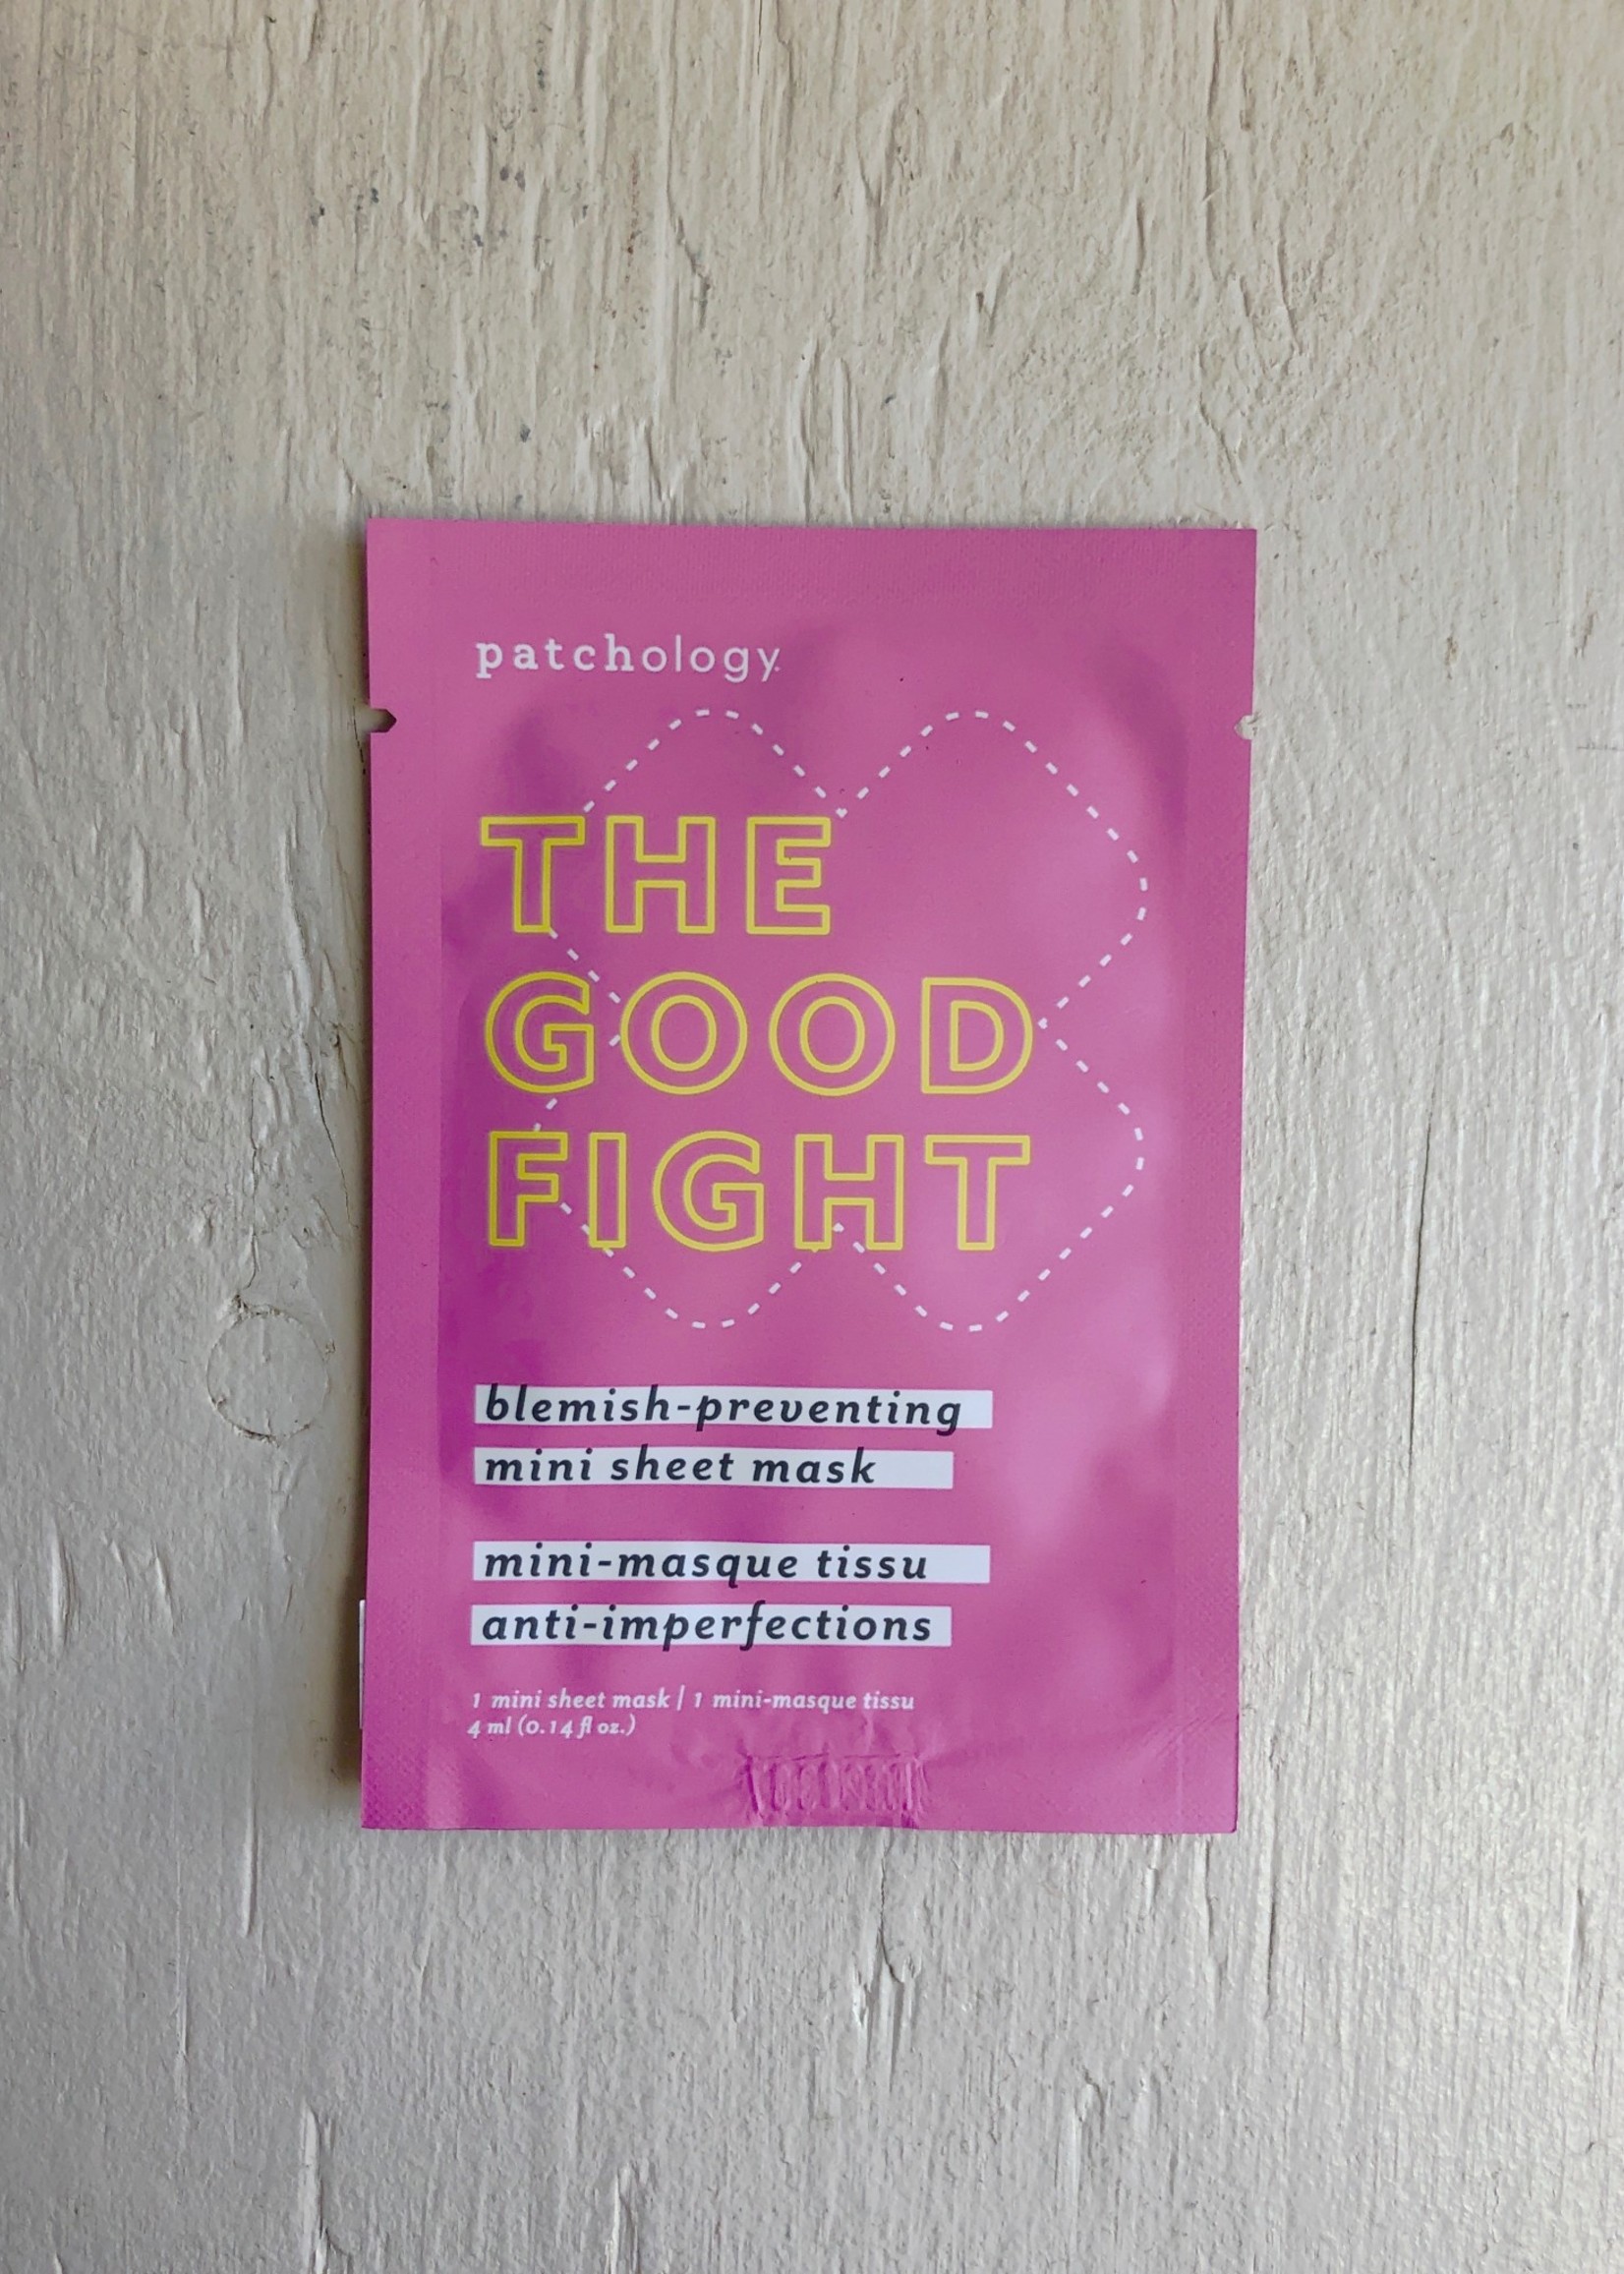 Patchology The Good Fight Mini Sheet Mask by Patchology